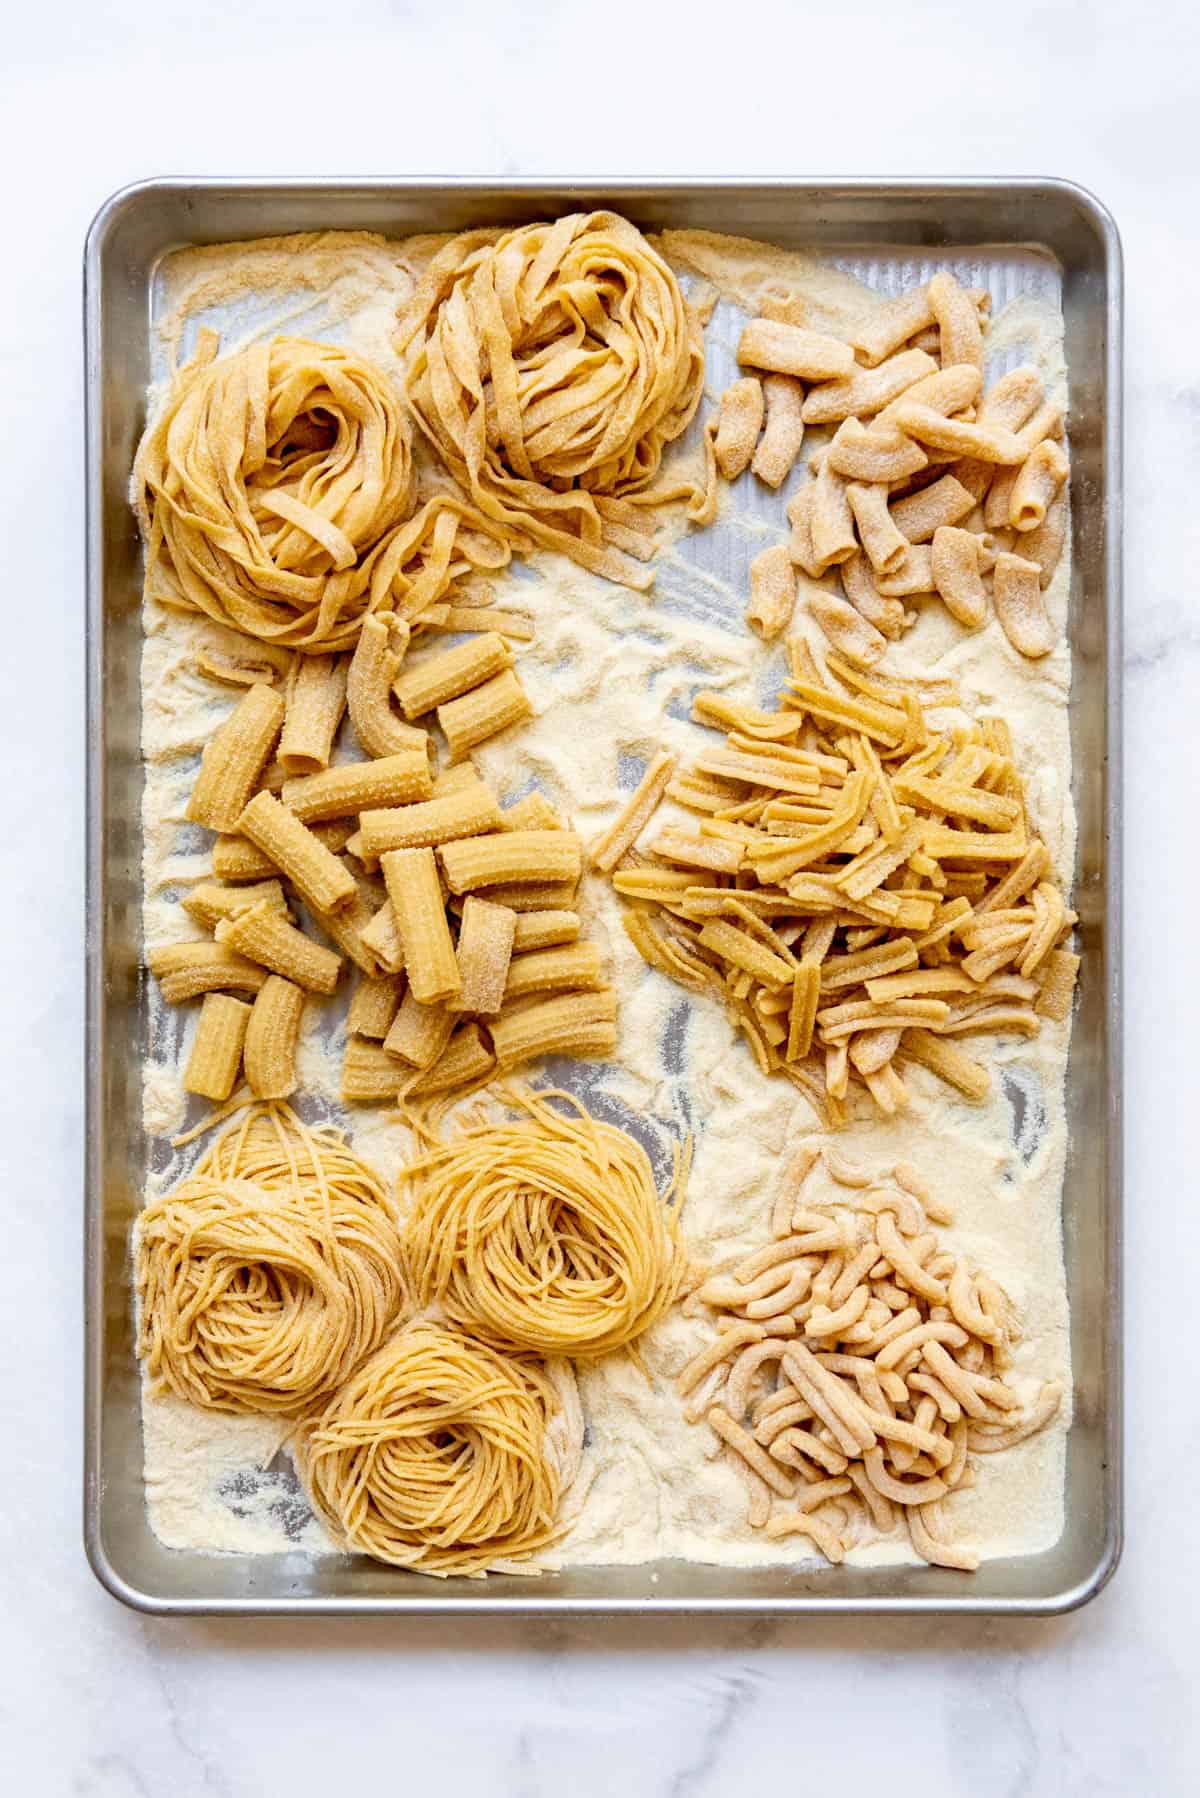 An overhead image of six different fresh pasta shapes including fettuccine, large macaroni, rigatoni, fusili, spaghetti, and small macaroni.